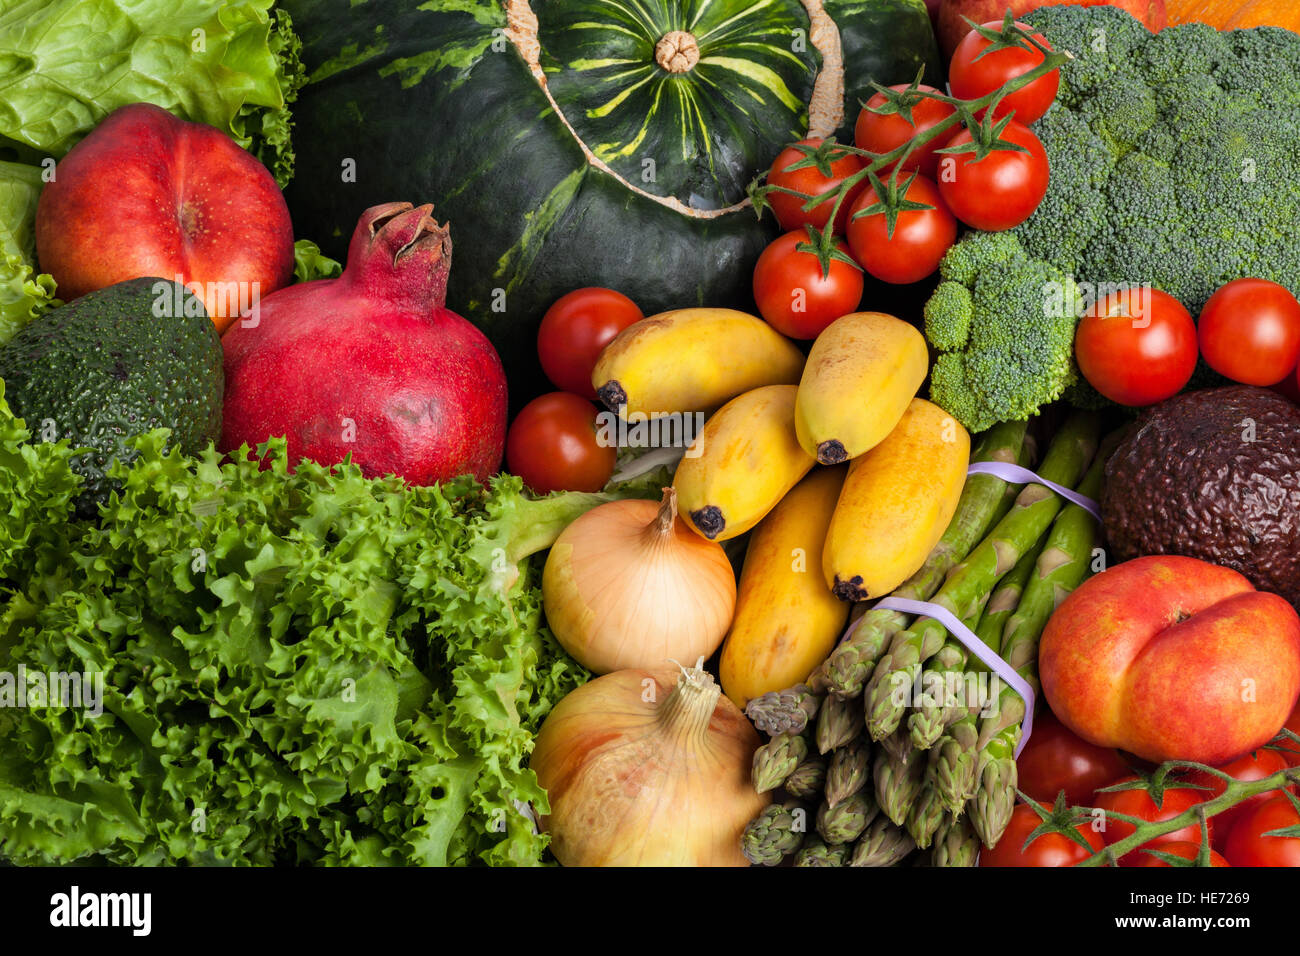 Imagen de frescas verduras de verano Foto de stock